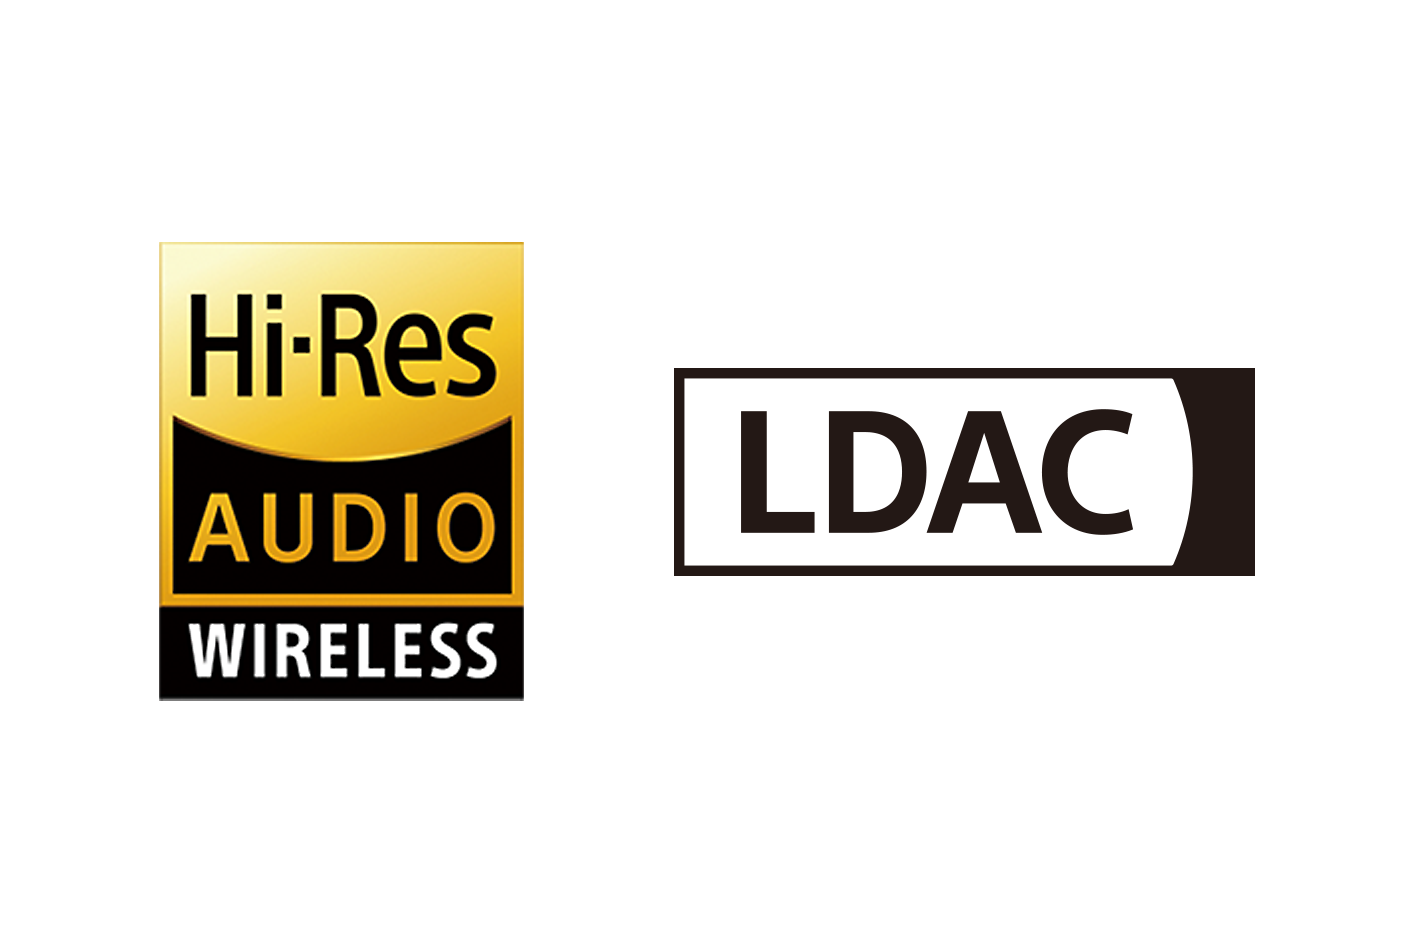 Hi-Res Audio Wireless and LDAC logo's.